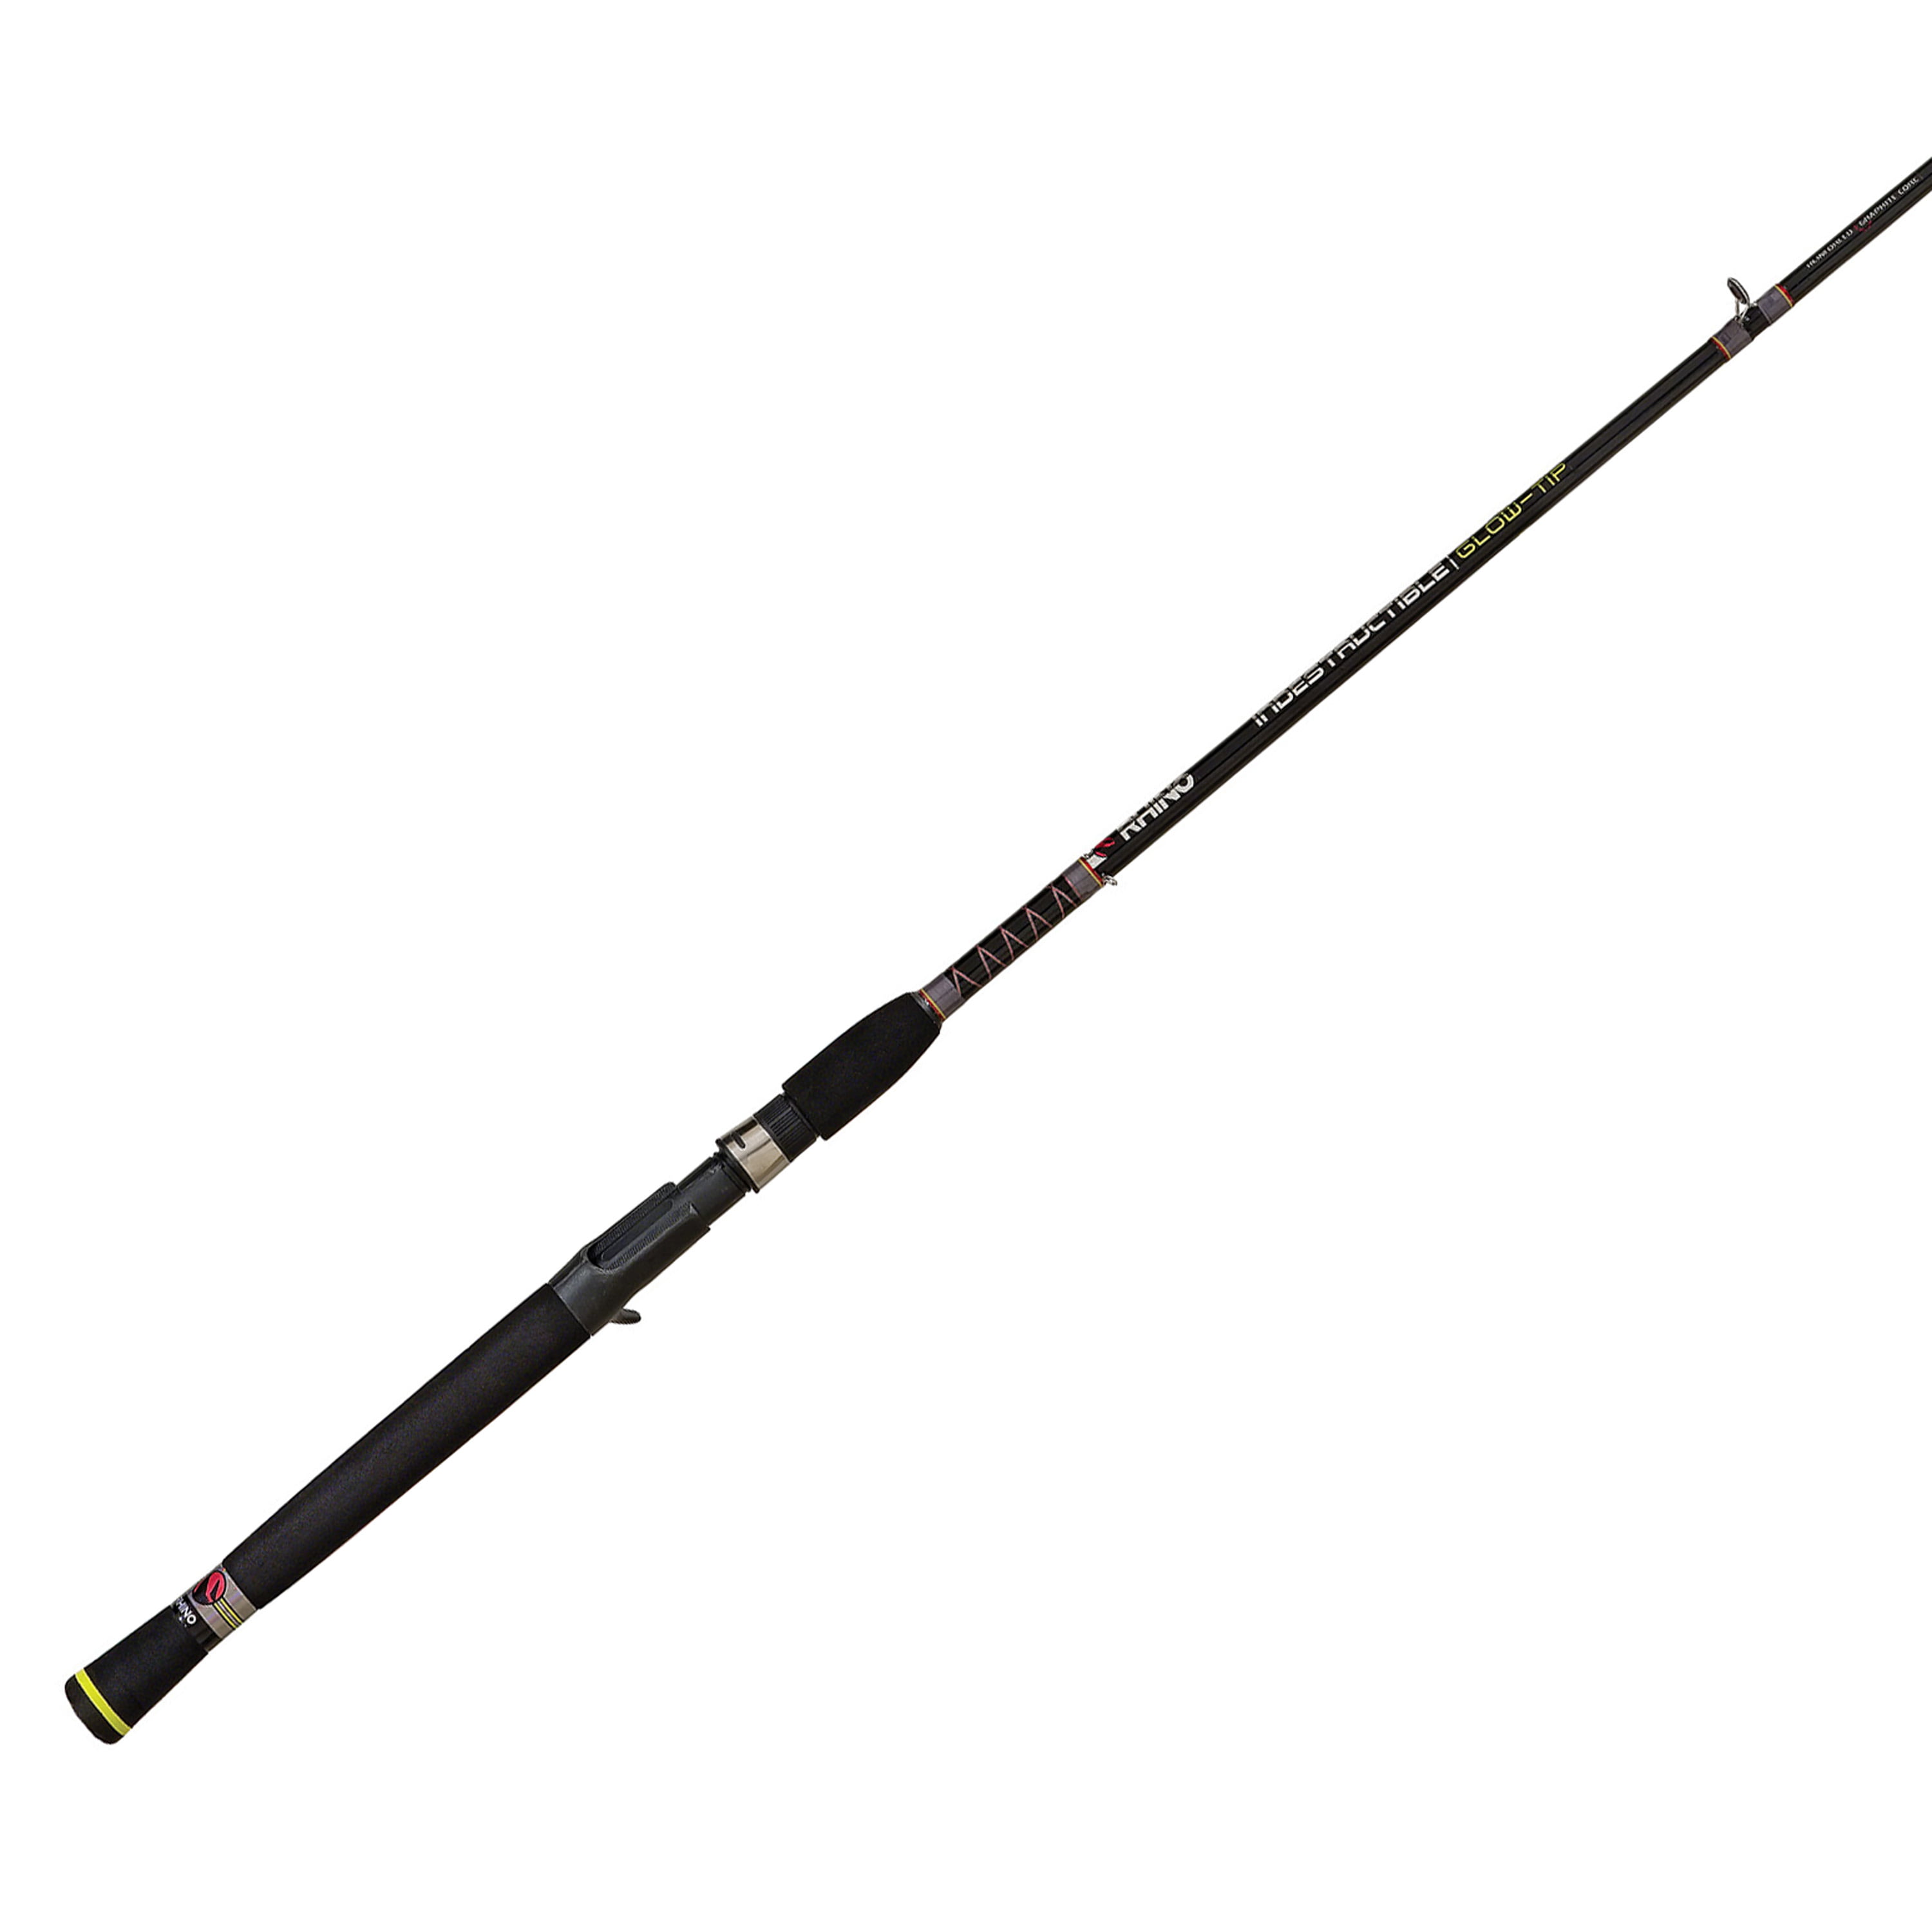 Rhino Tough 5'6 Medium Casting Rod